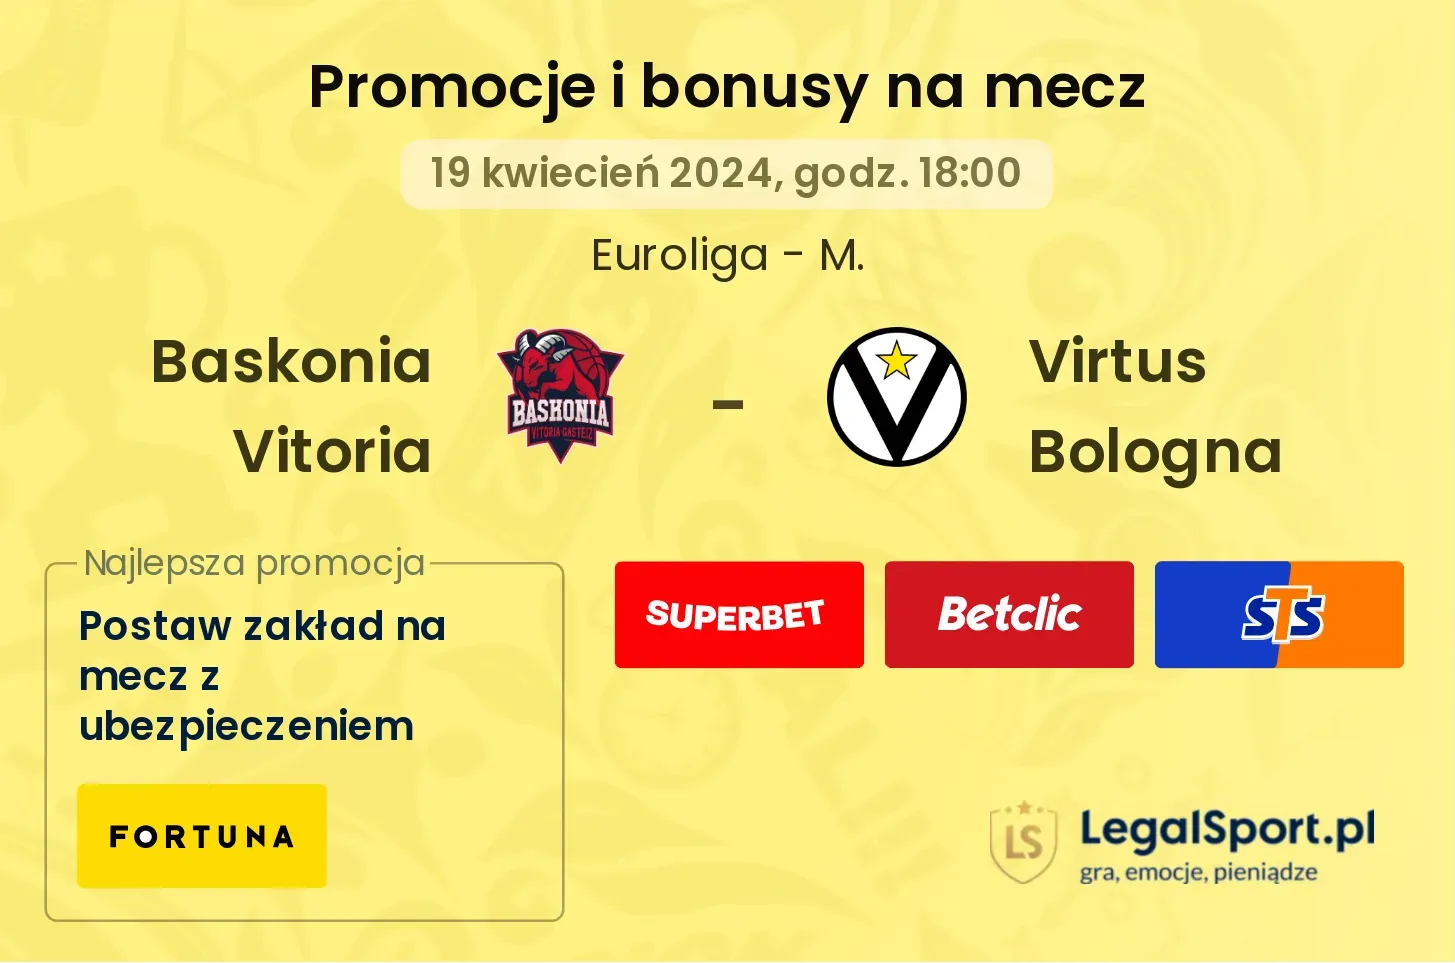 Baskonia Vitoria - Virtus Bologna promocje bonusy na mecz